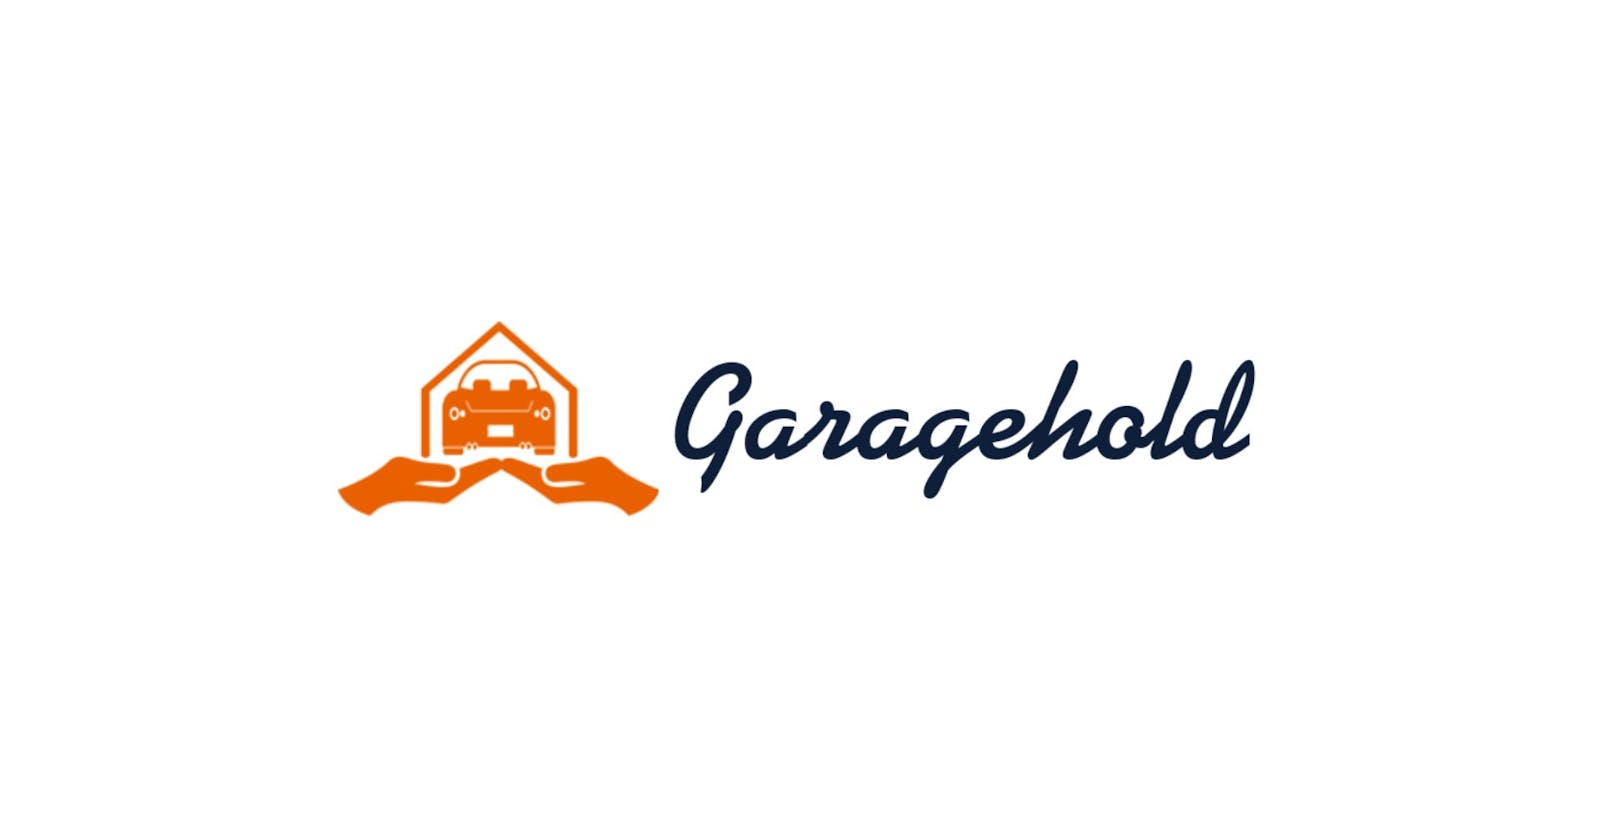 Garagehold's Guide to the Best Garage Door Insulation Kits